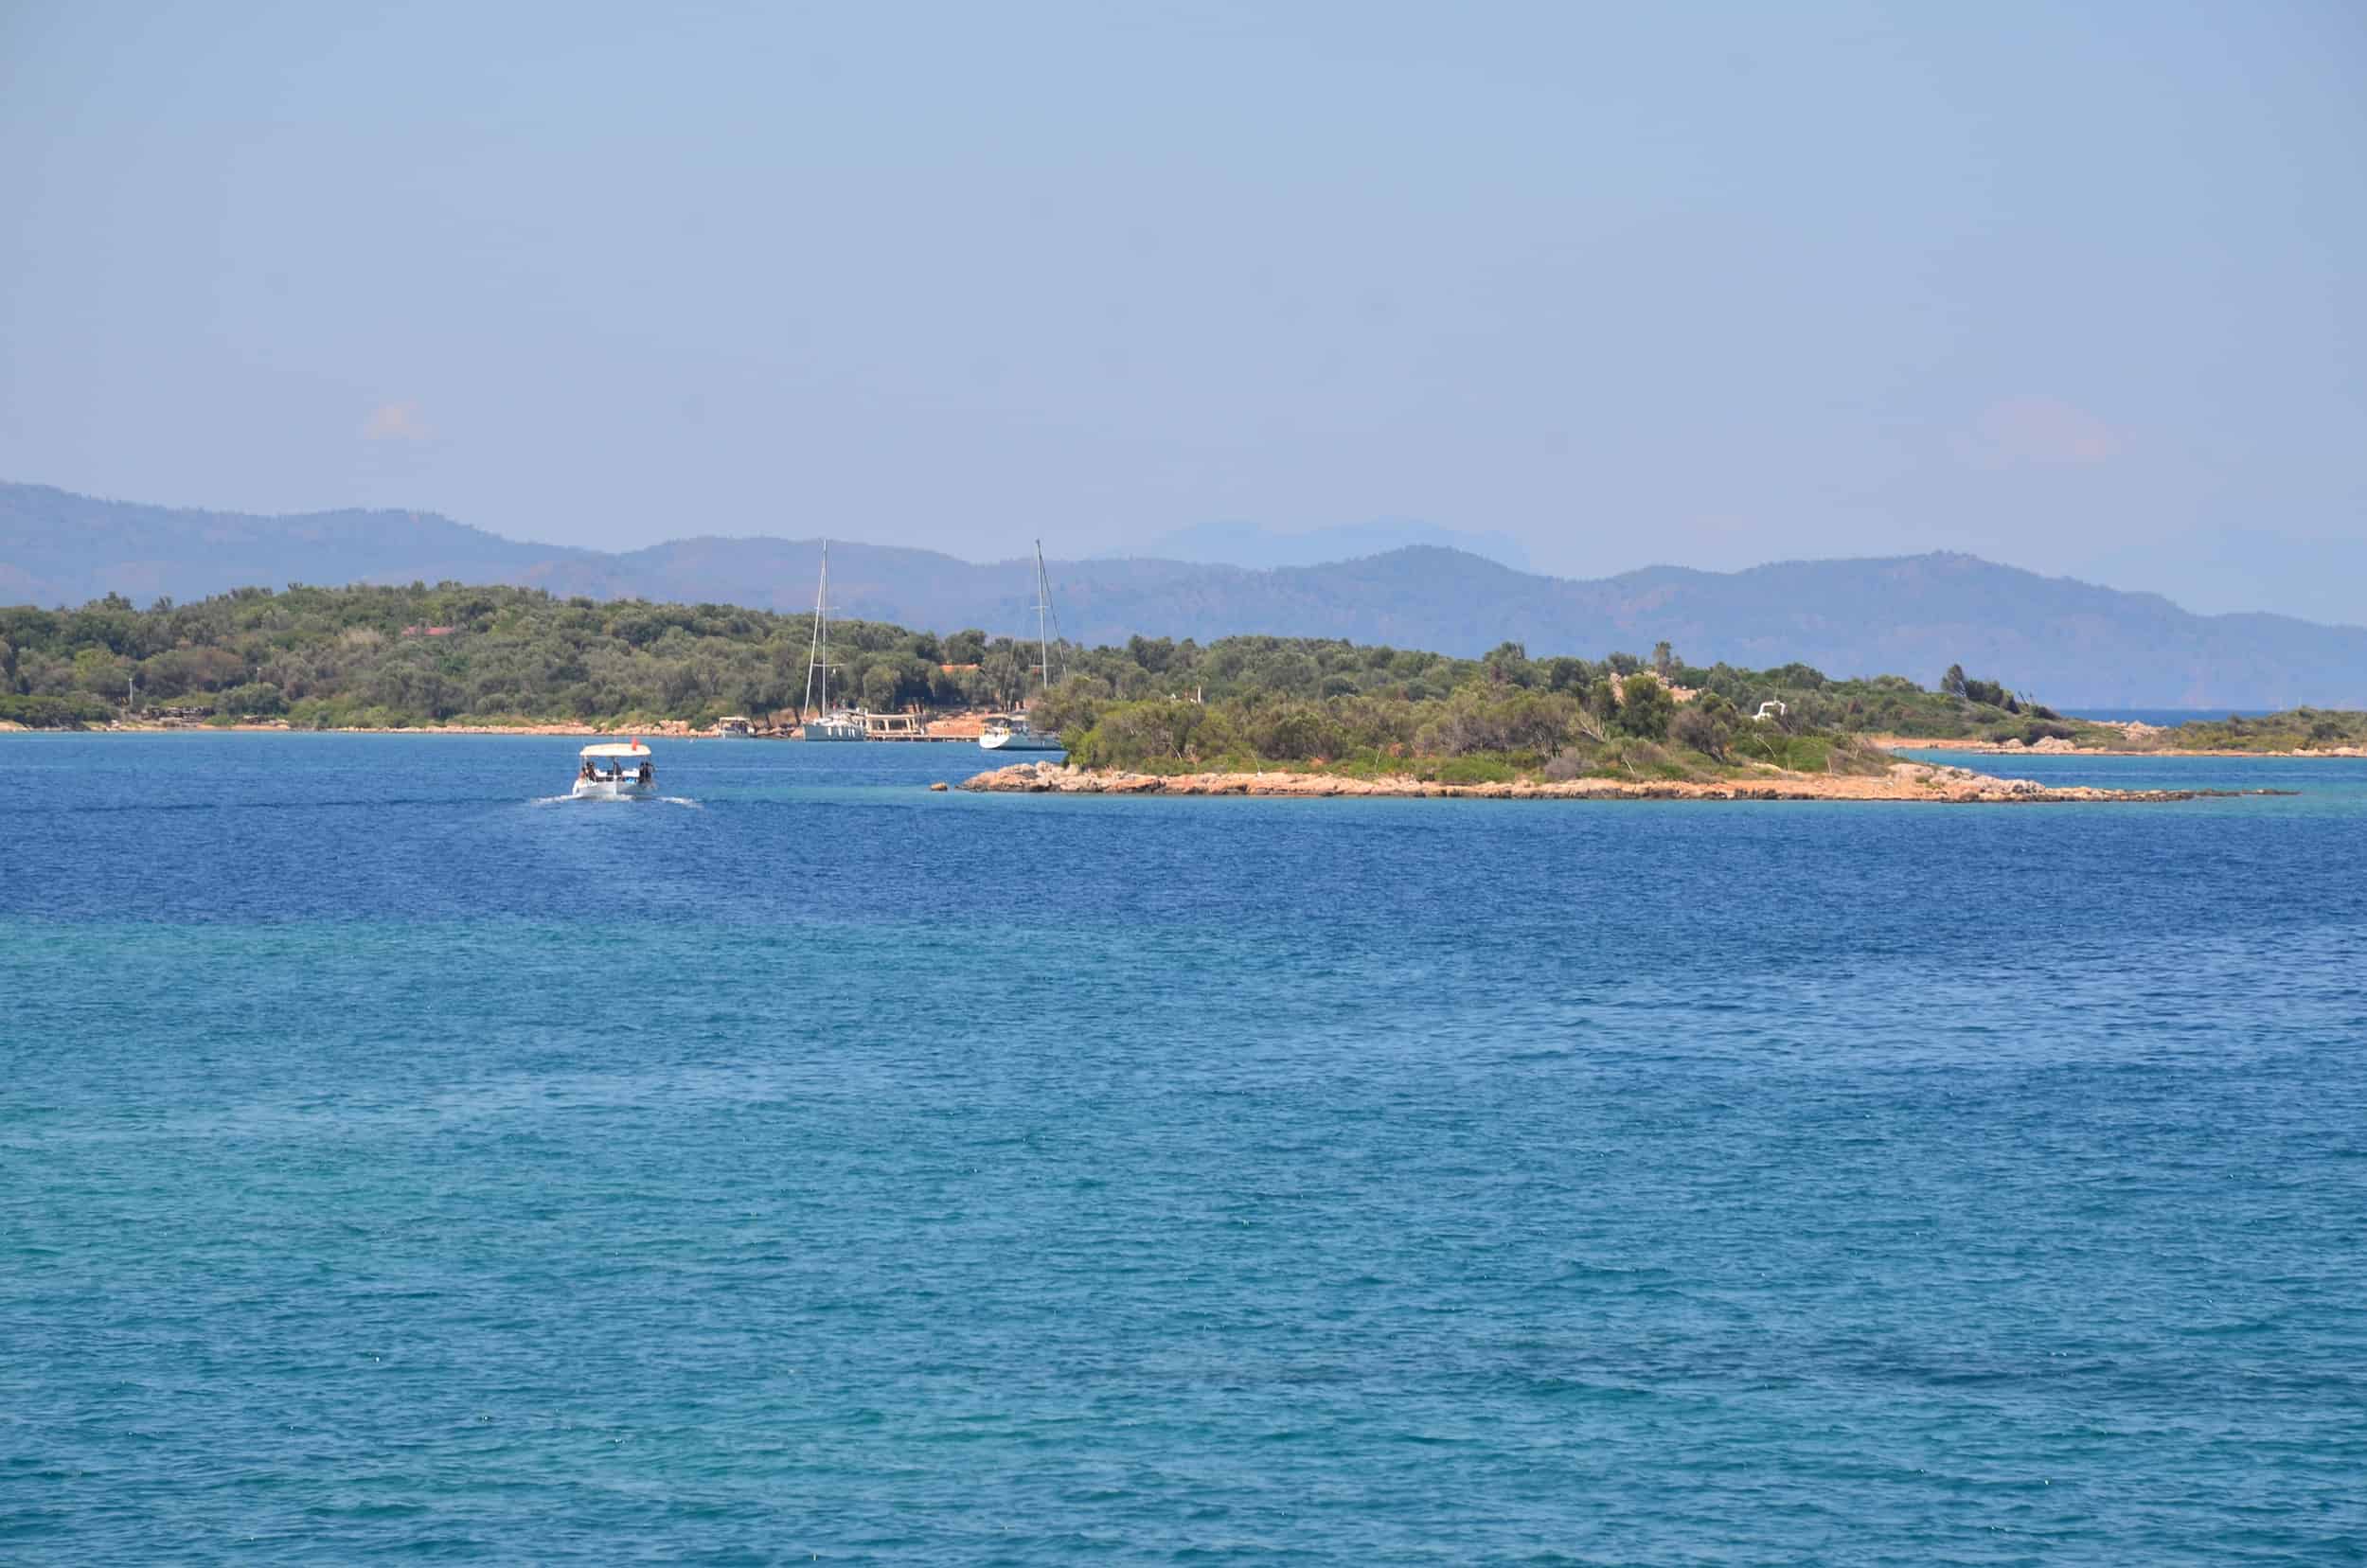 Approaching Sedir Island in Turkey